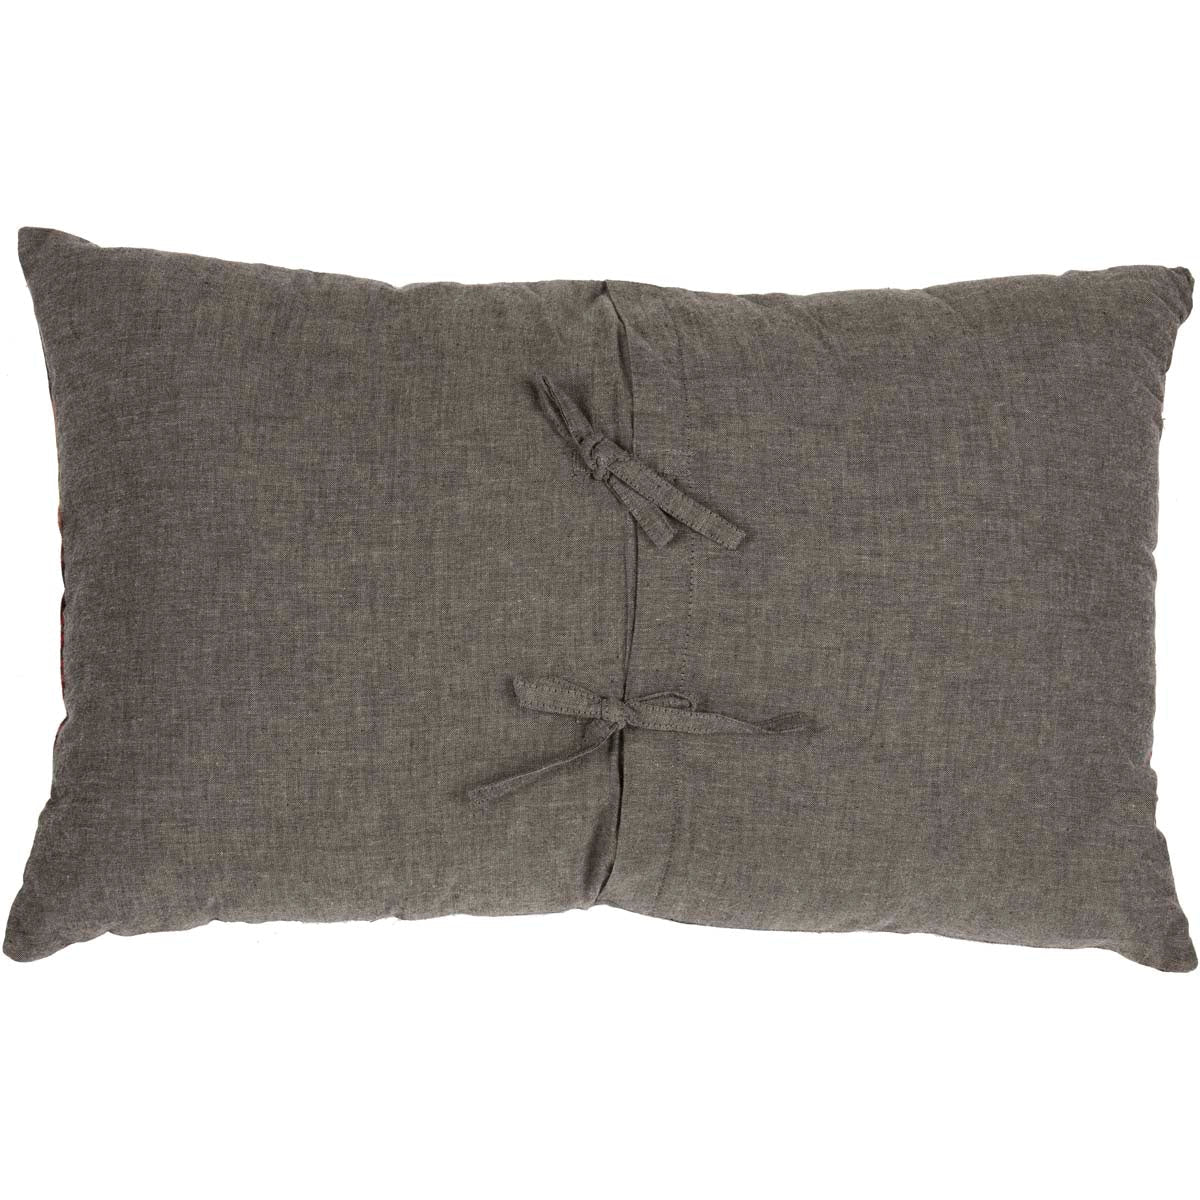 Andrassy Moose Pillow